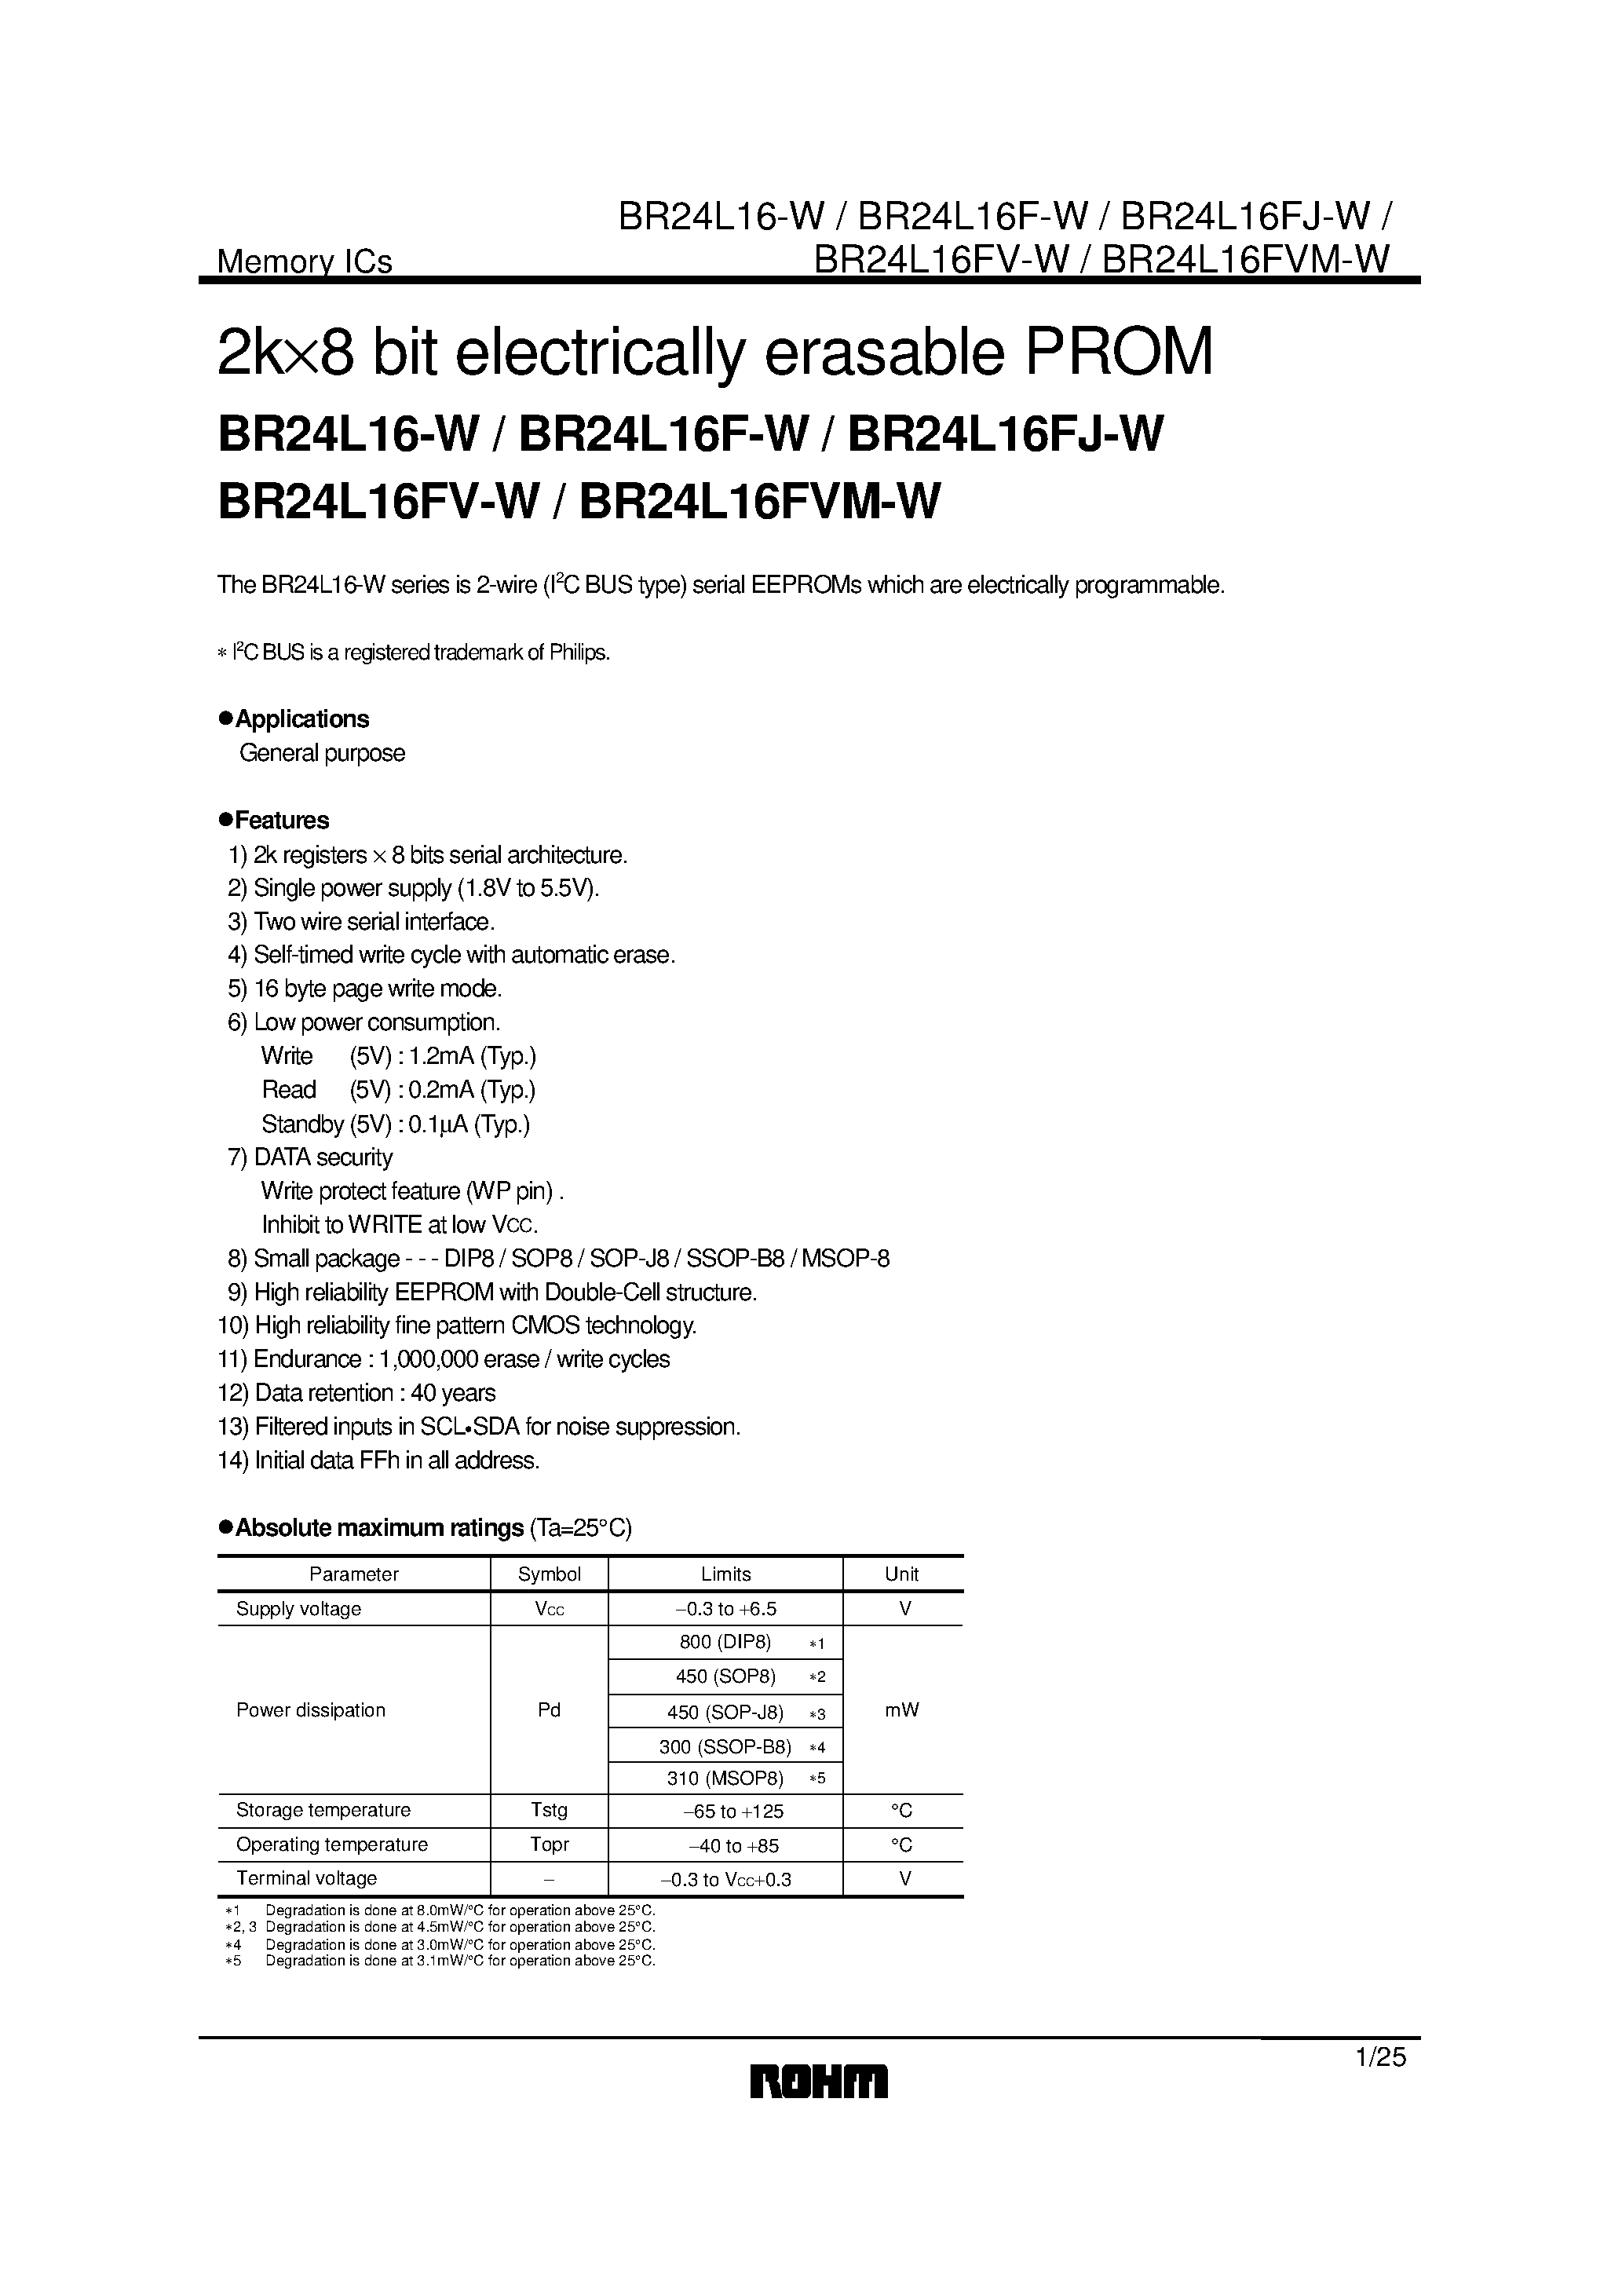 Datasheet BR24L16FV-W - 2k8 bit electrically erasable PROM page 1